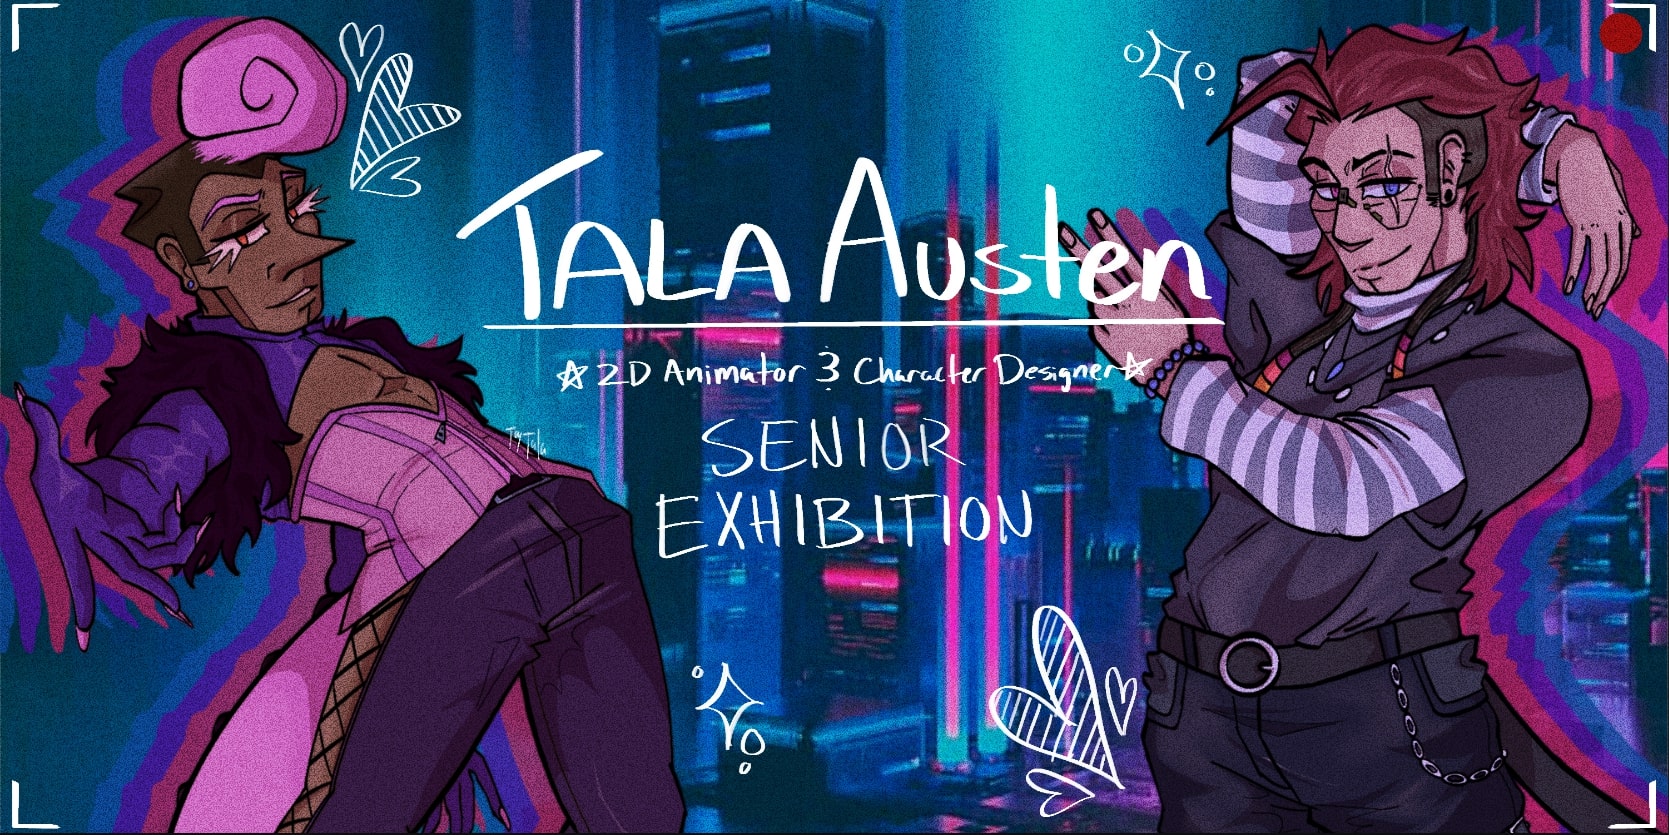 Tala Austen Exhibition